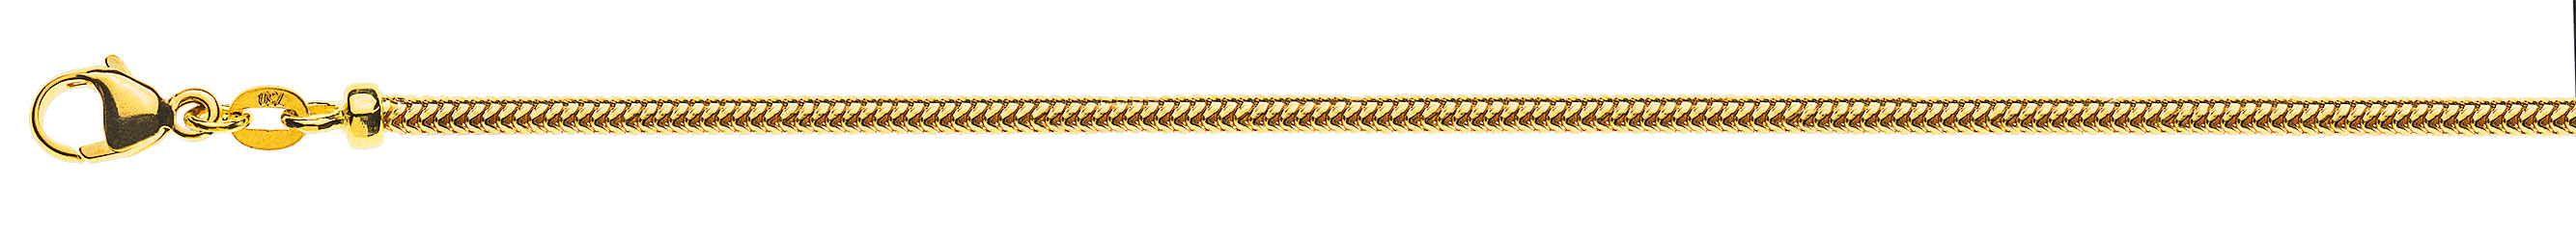 AURONOS Prestige Necklace yellow gold 18K snake chain 42cm 2.4mm